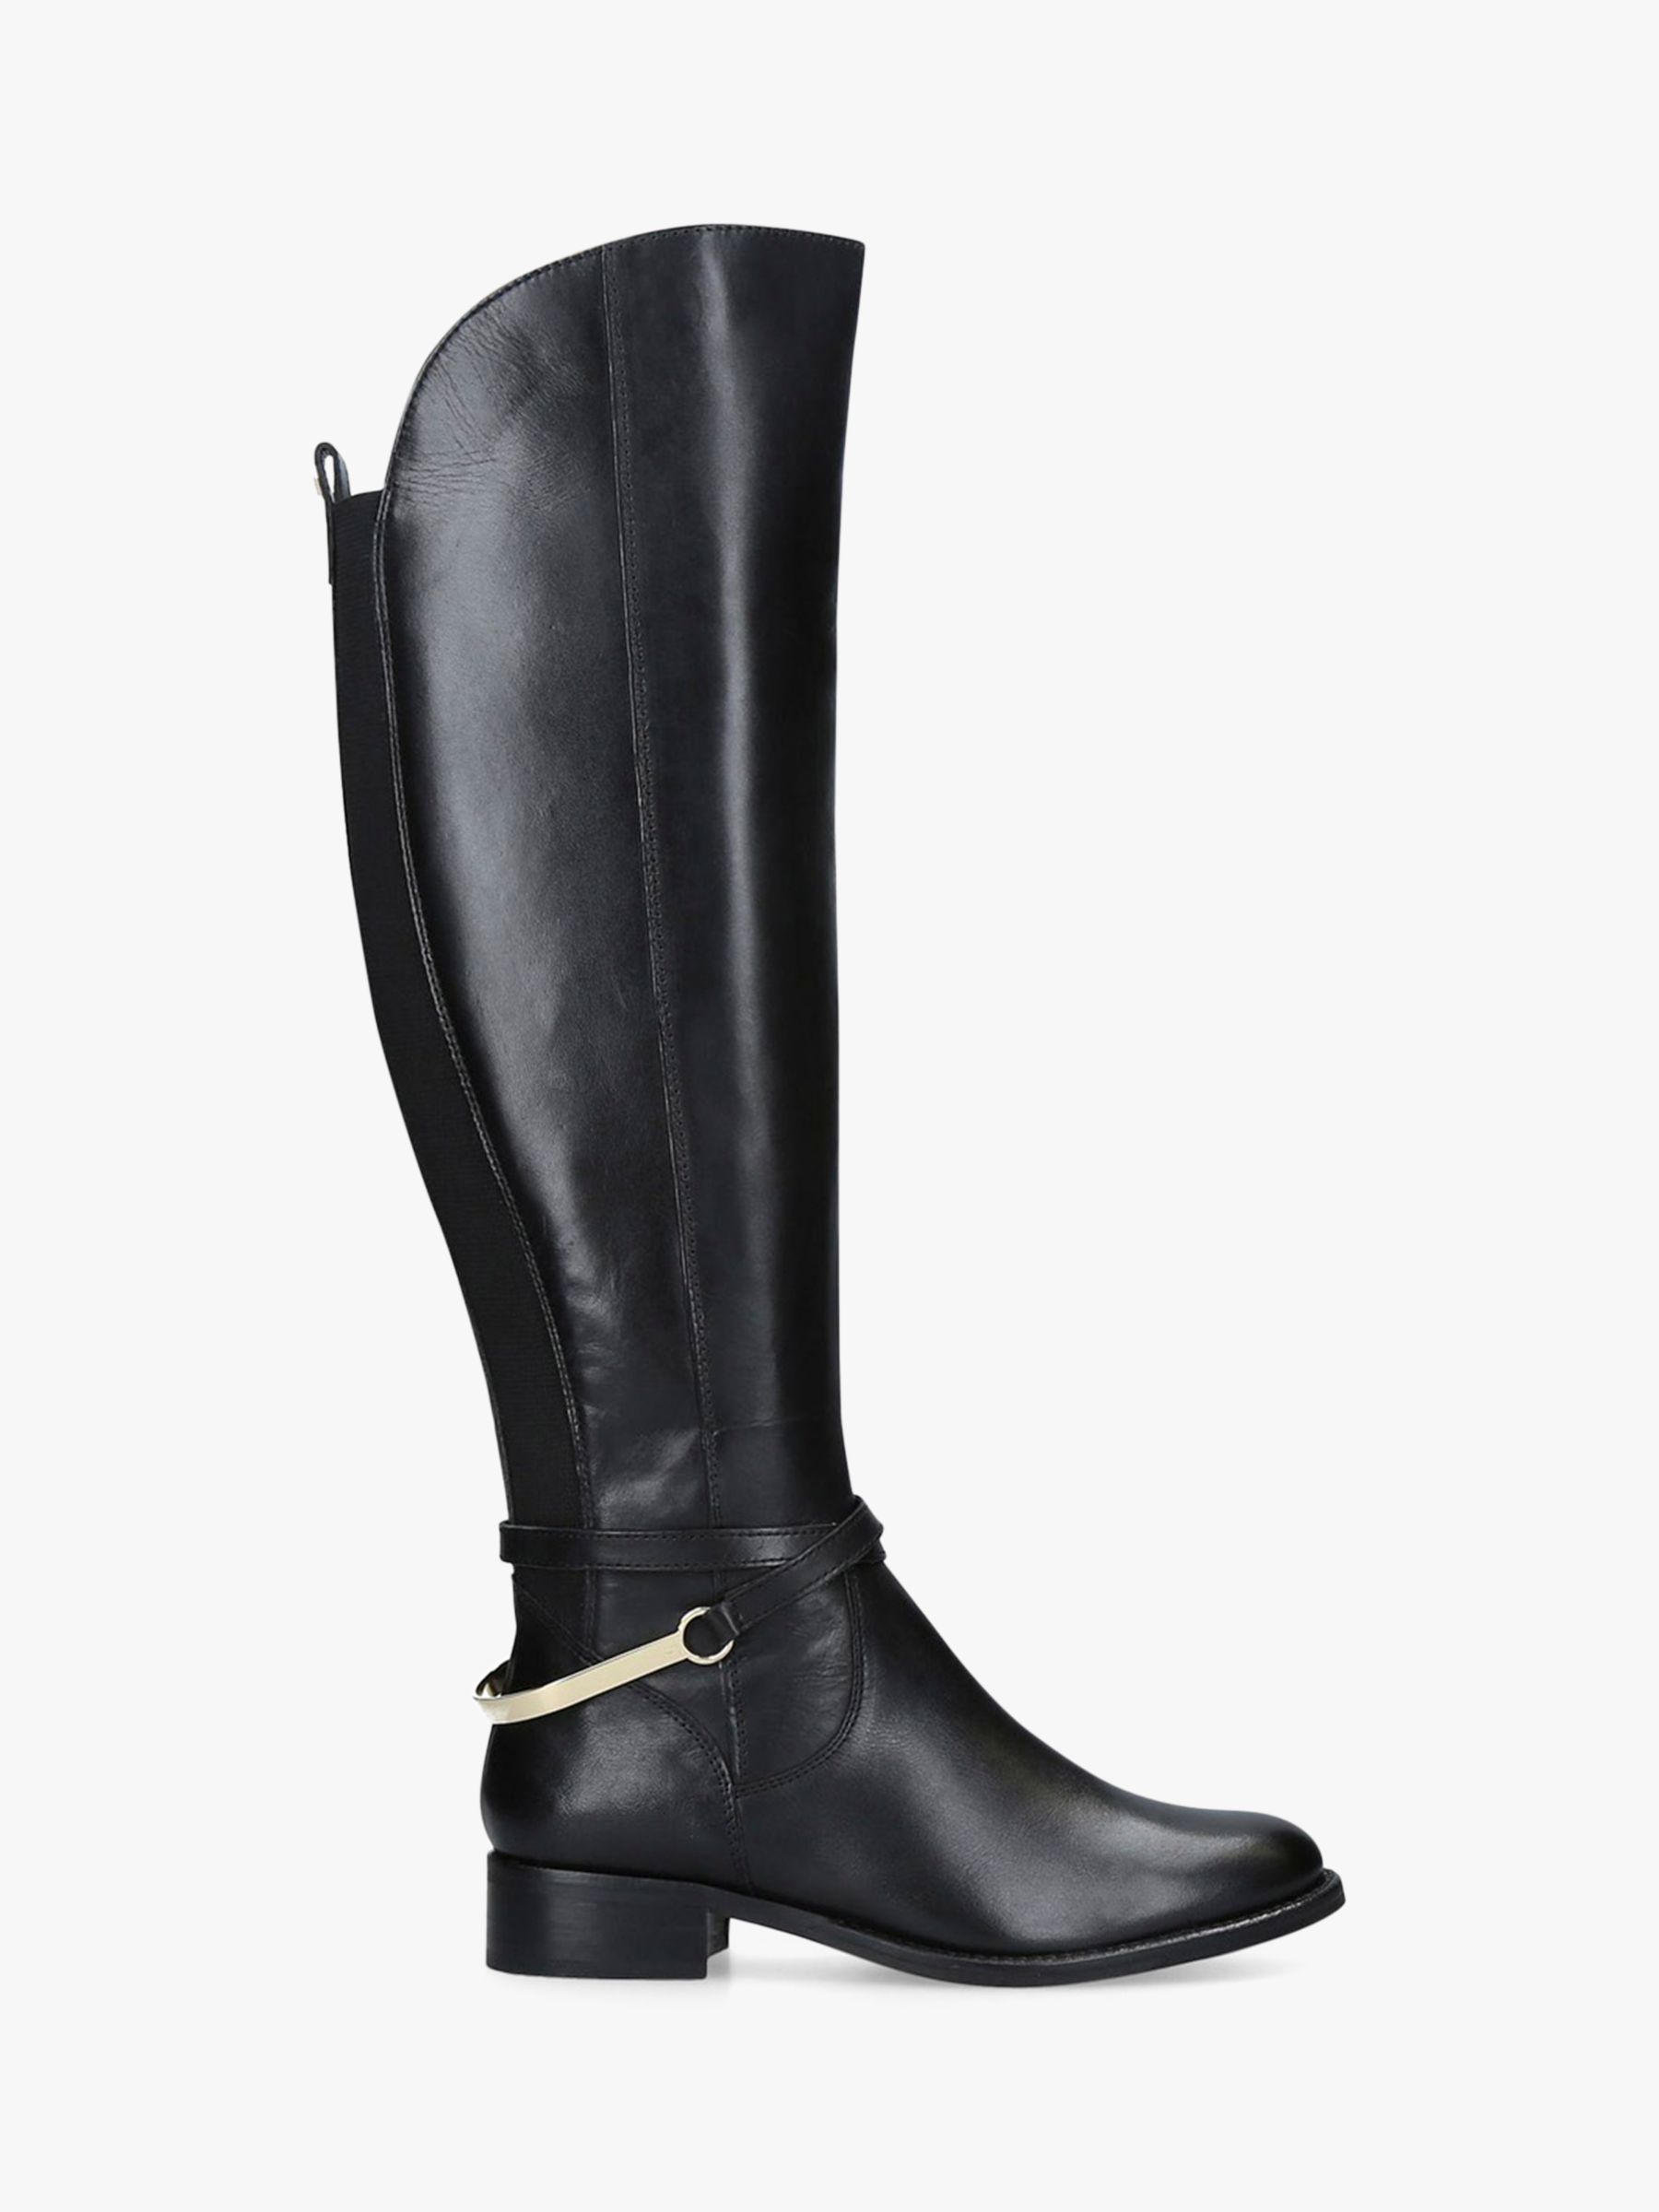 Carvela Parading Leather Knee High Boots, Black at John Lewis & Partners